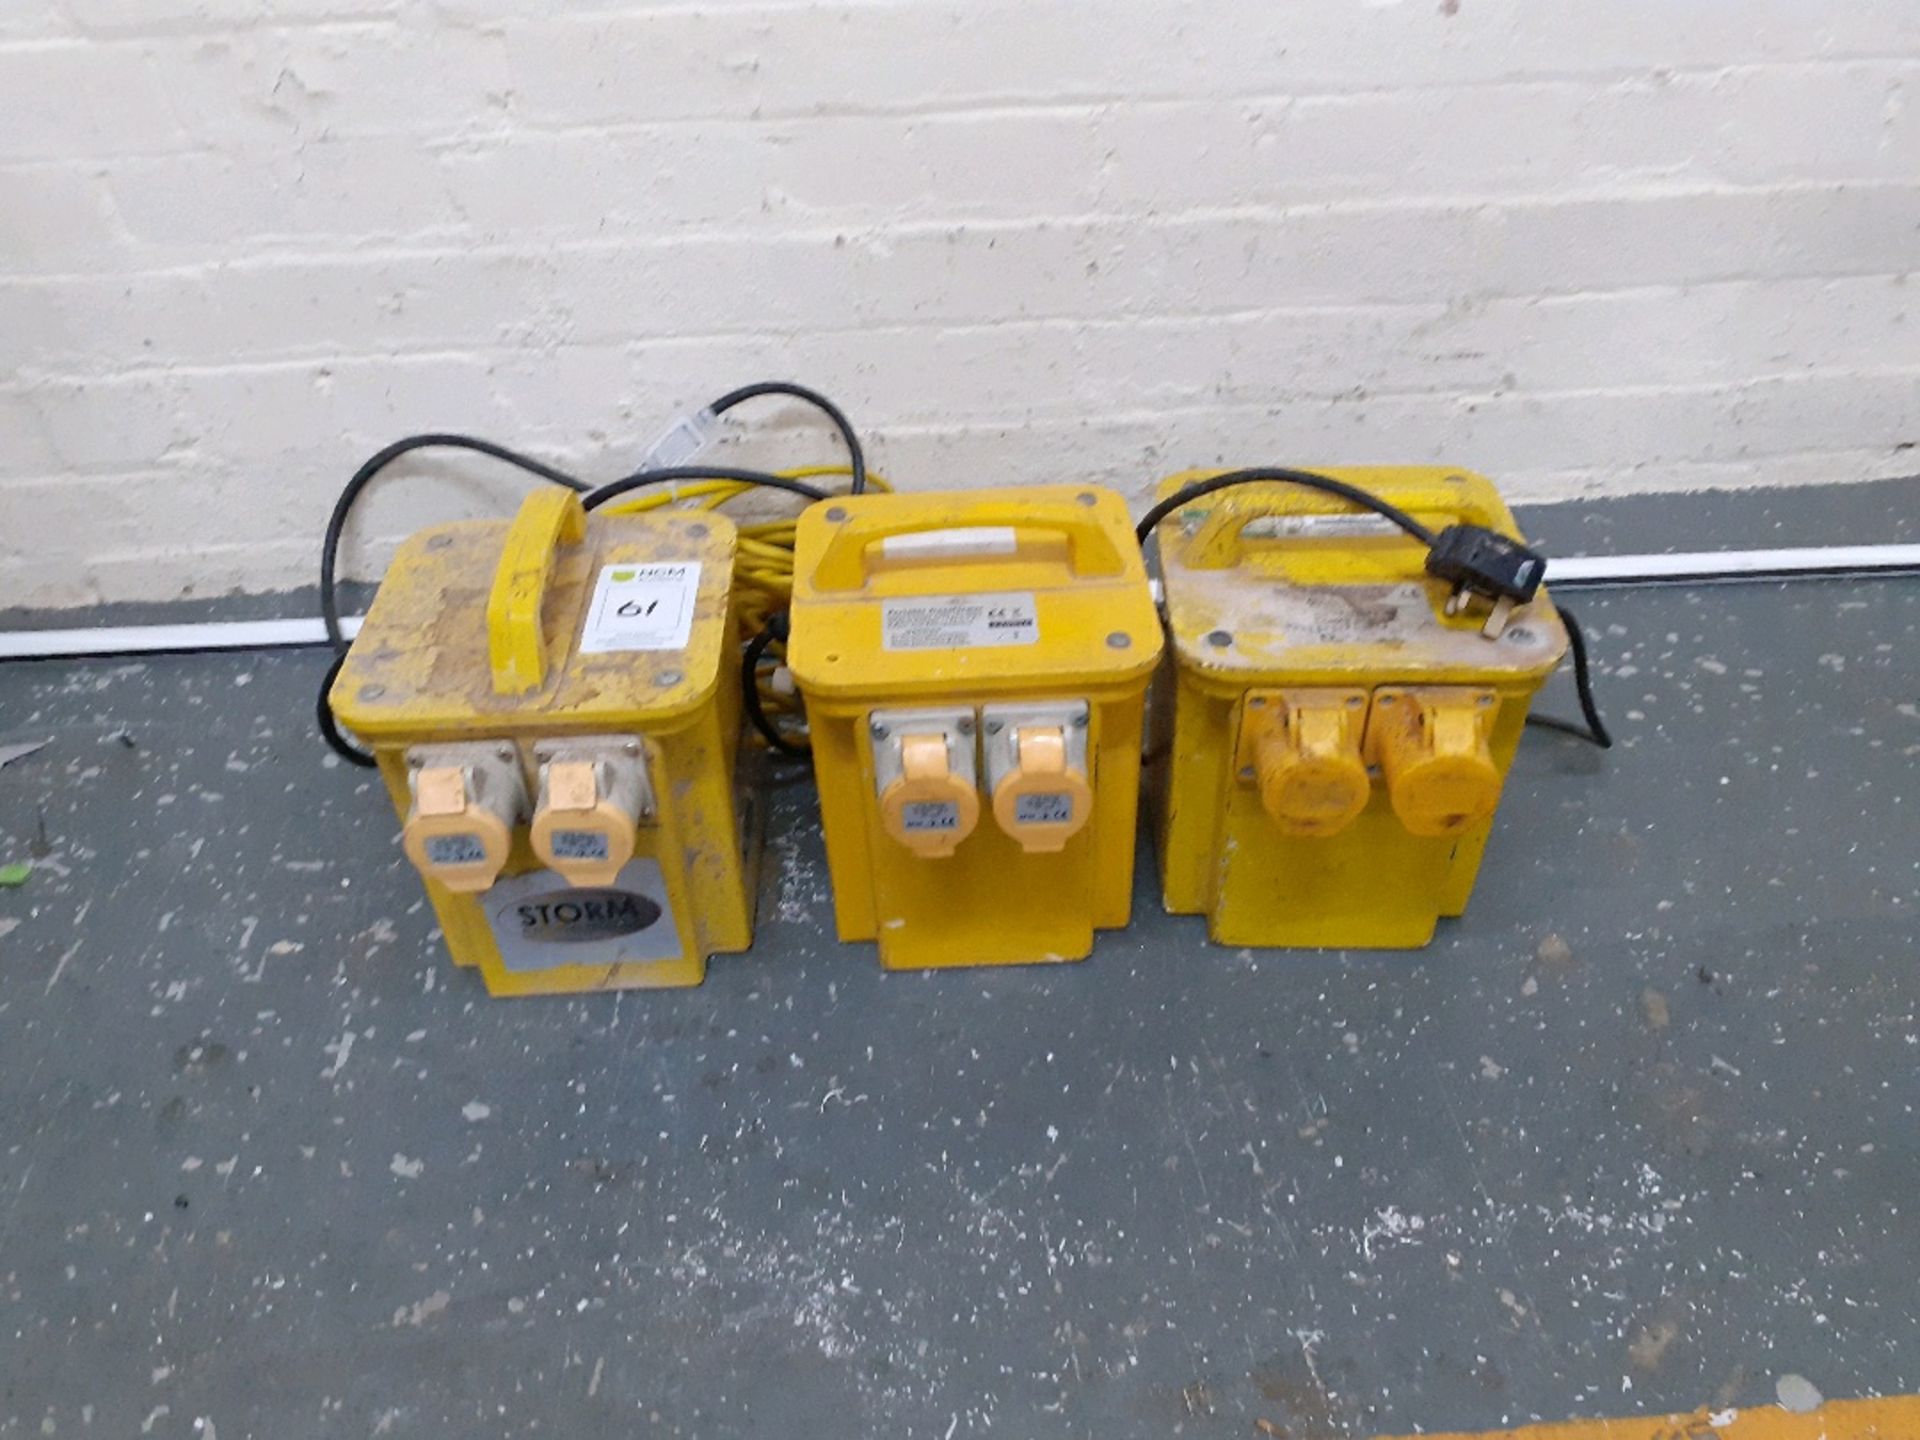 Portable transformers